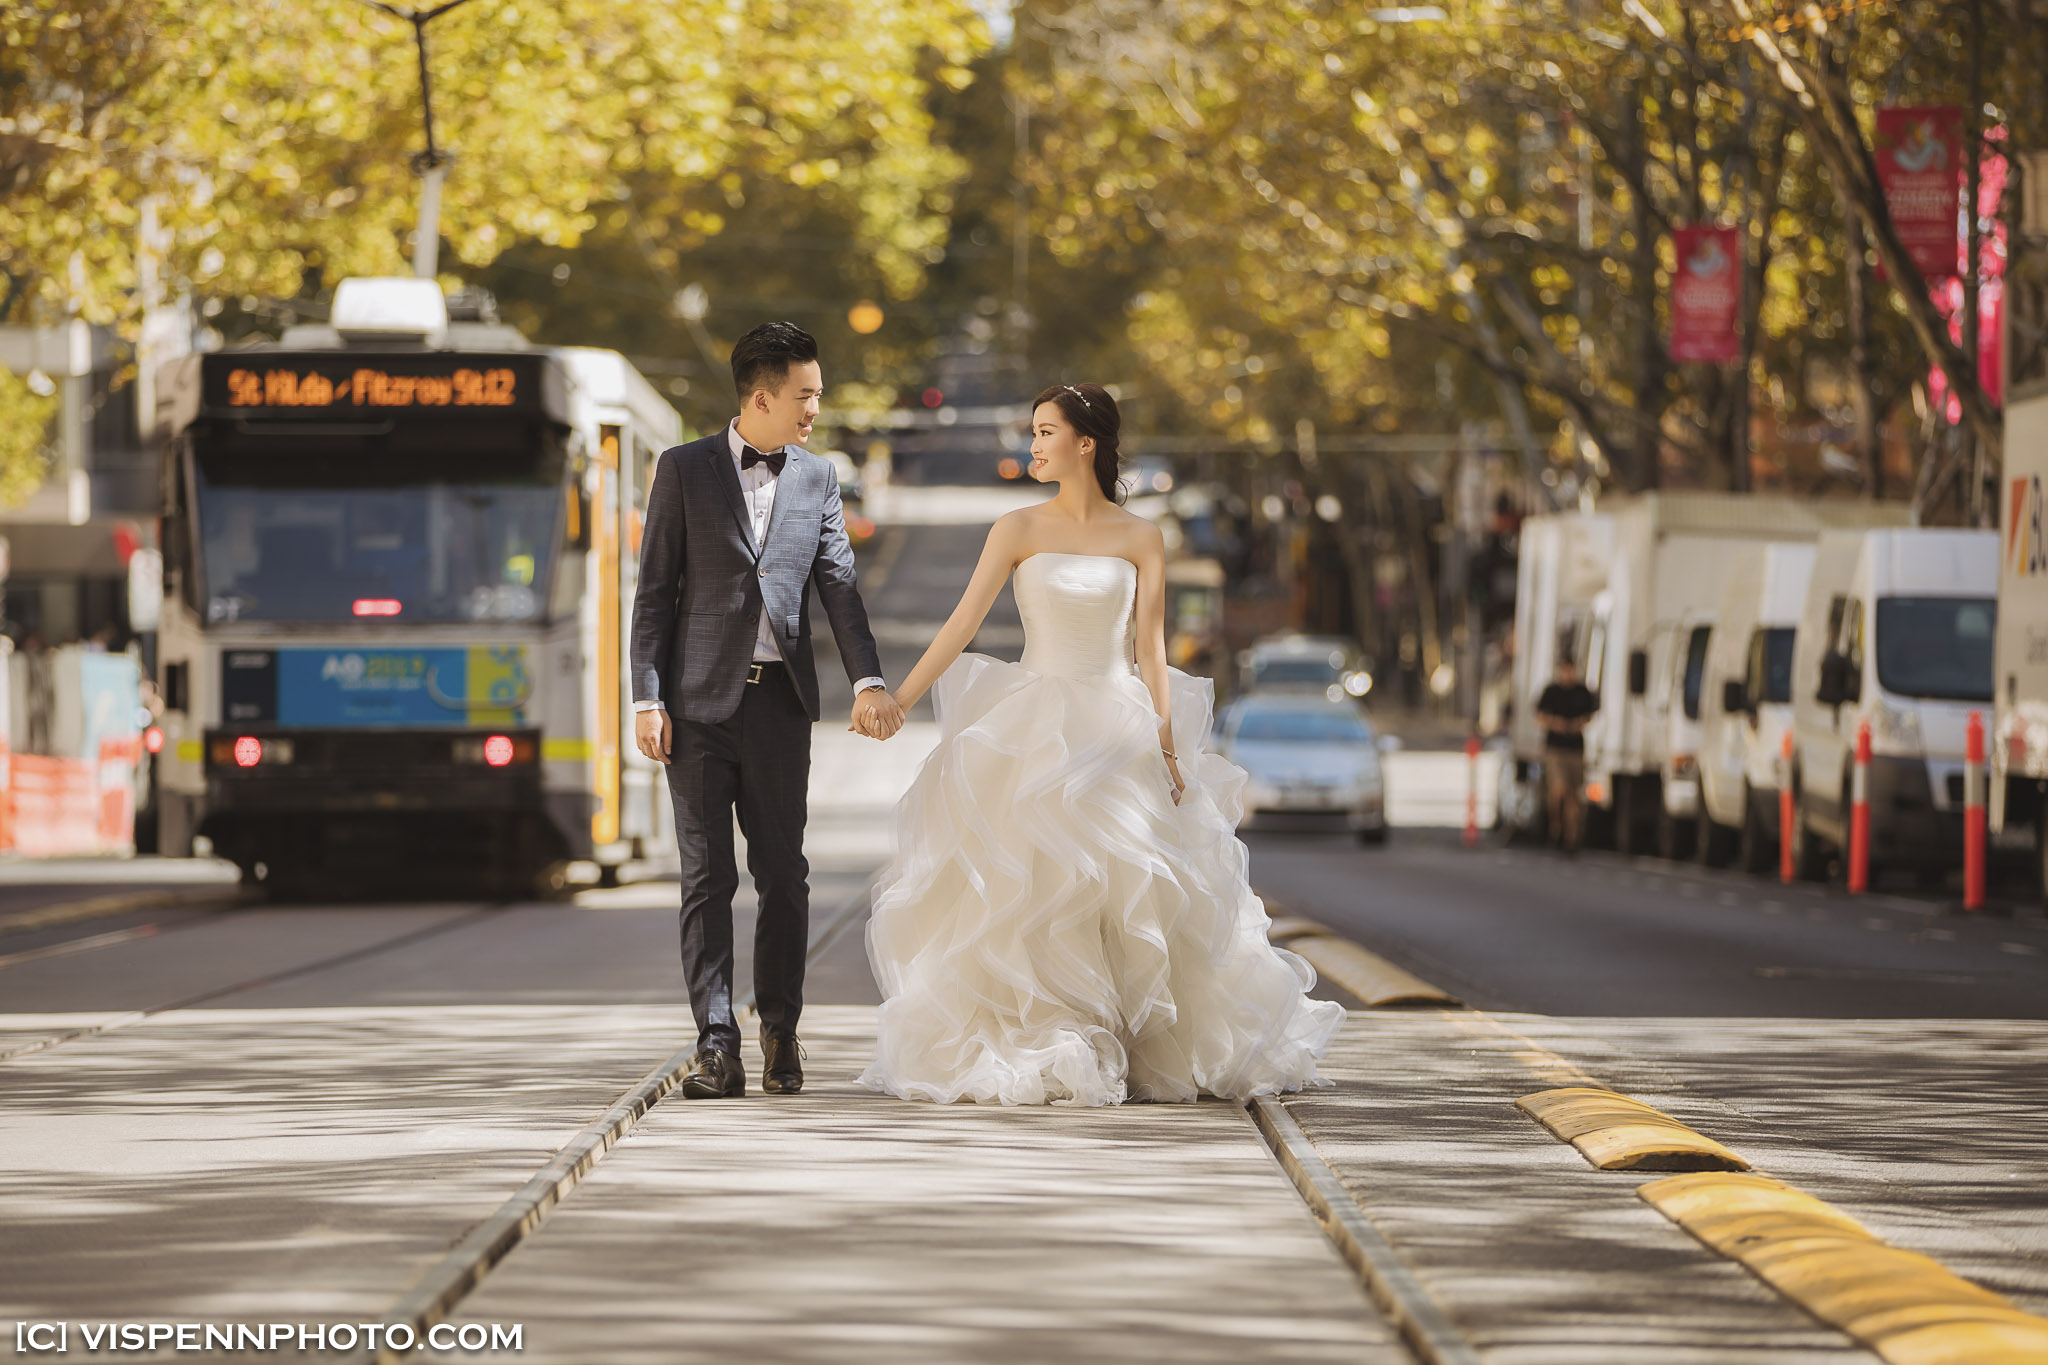 PRE WEDDING Photography Melbourne VISPENN 墨尔本 婚纱照 结婚照 婚纱摄影 AndyCHEN 2796 1DX VISPENN